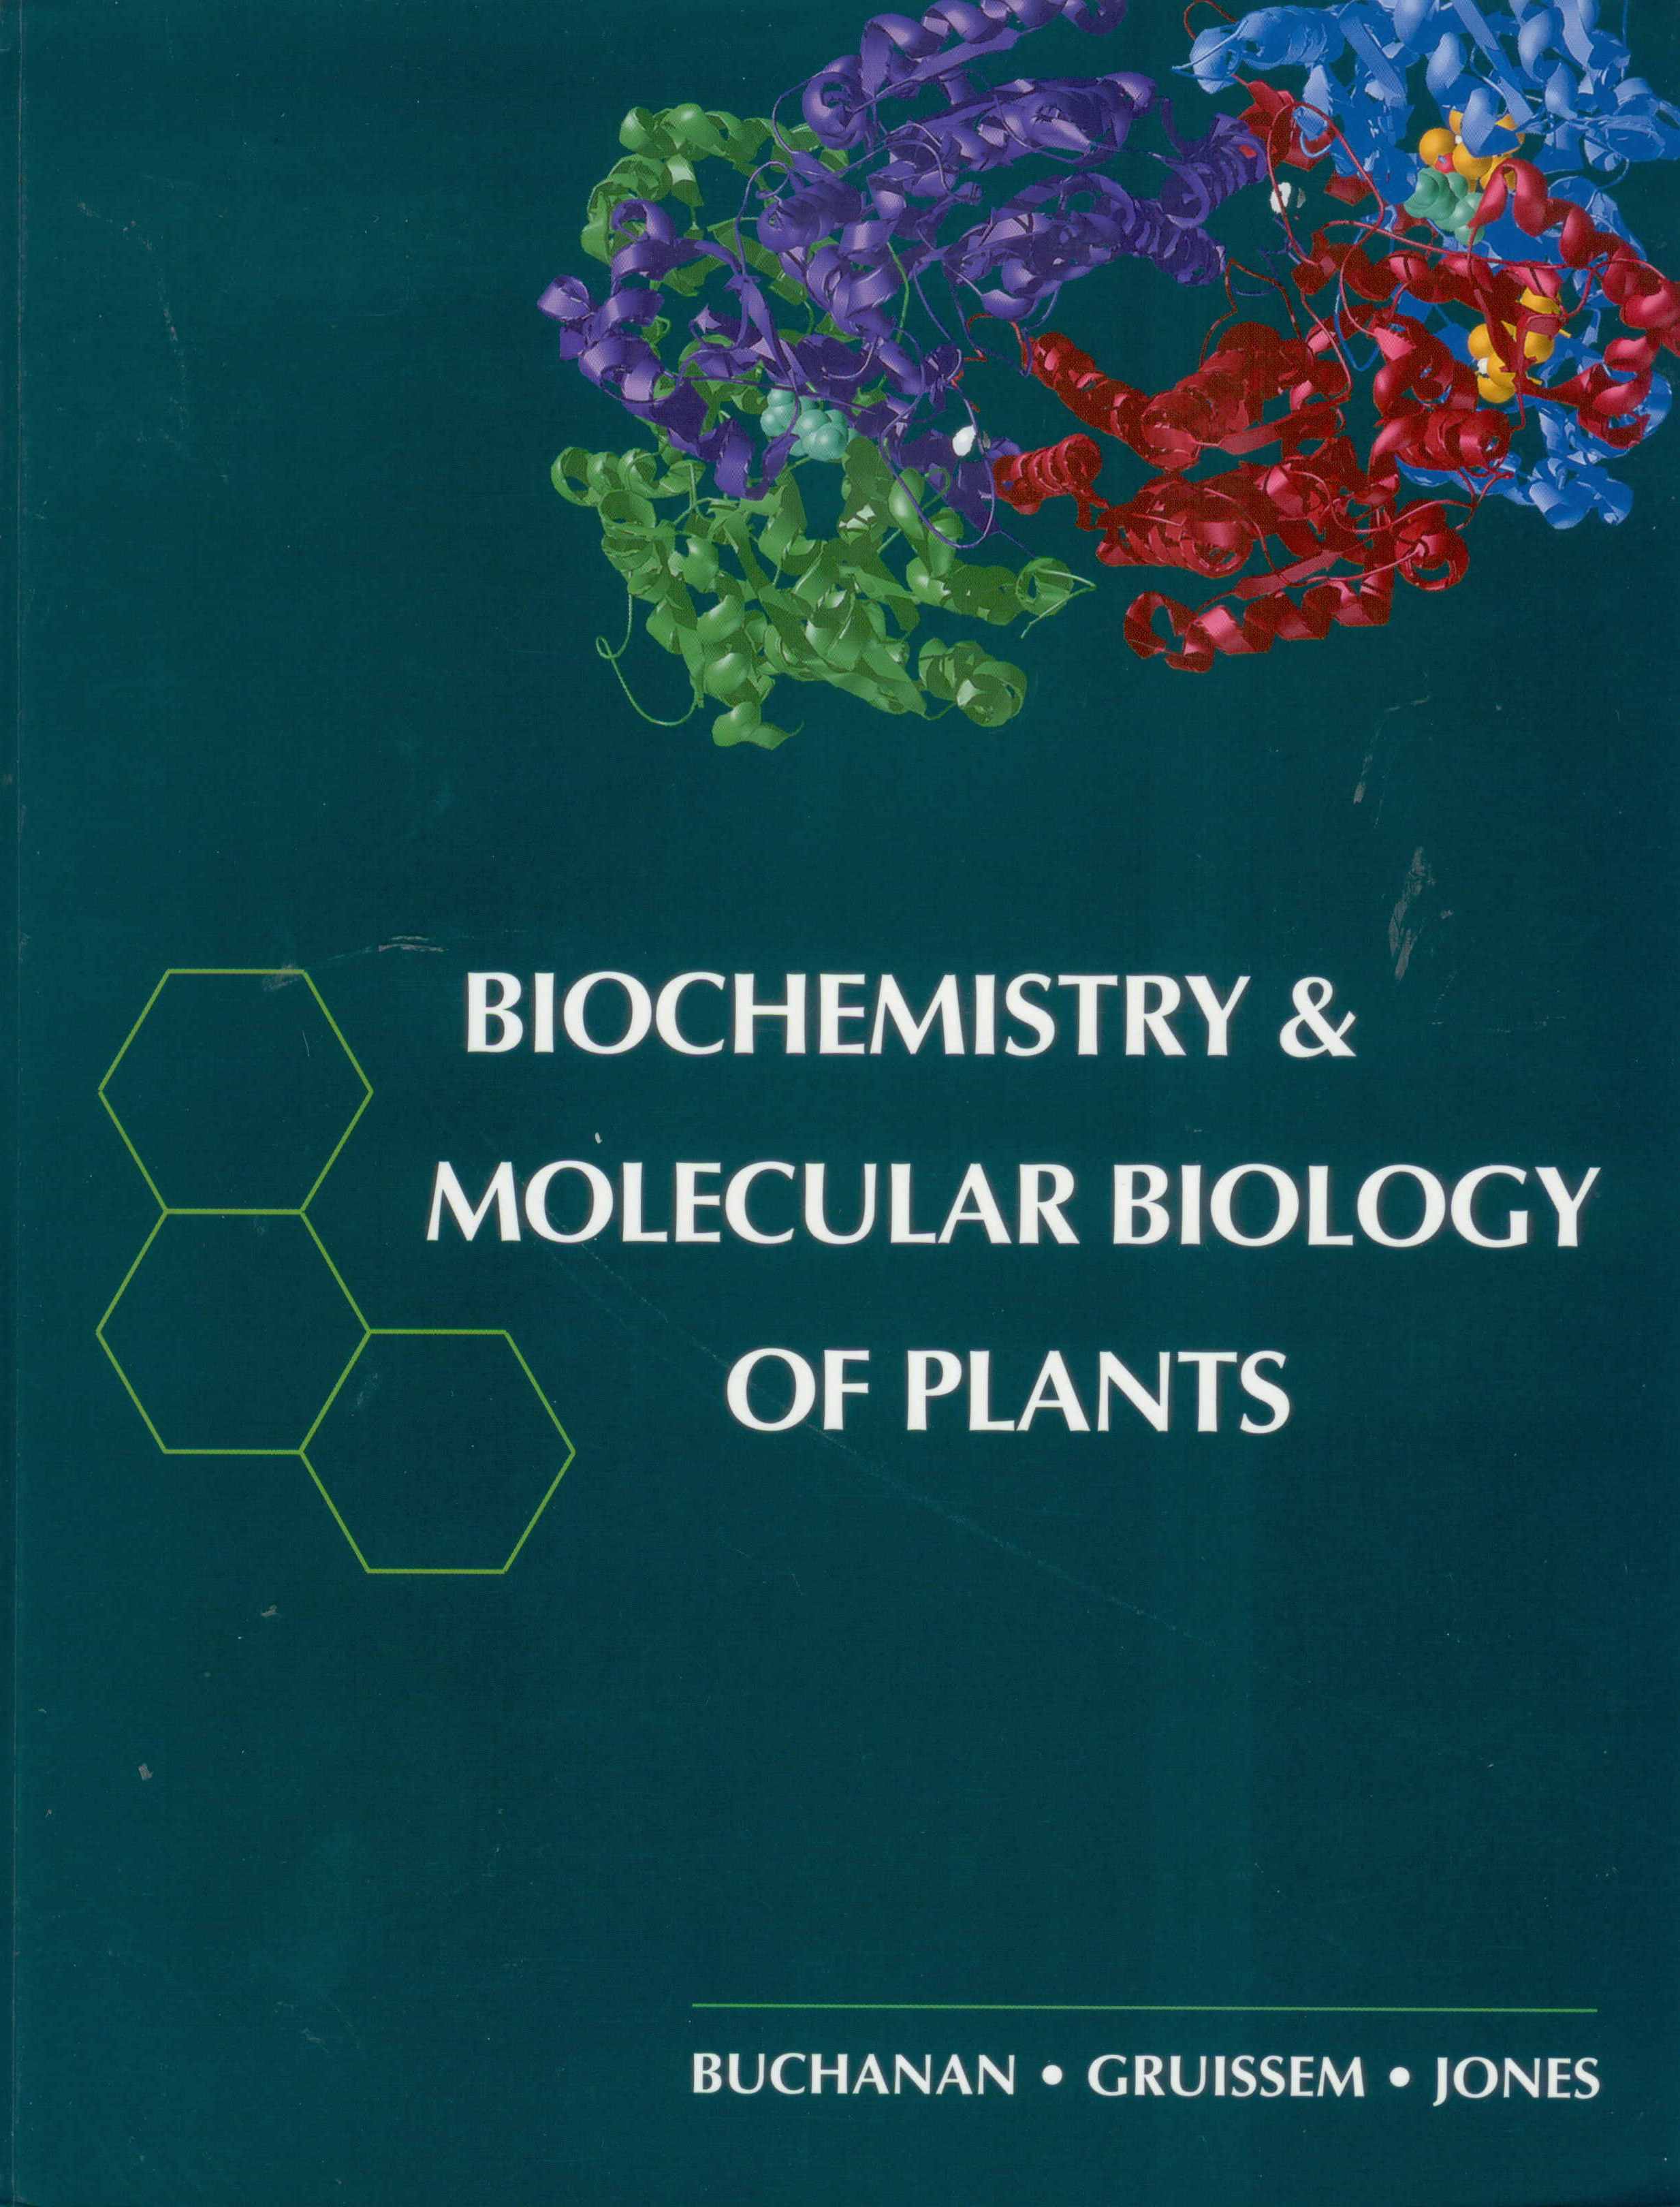 http://www.cenicana.org/investigacion/seica/imagenes_libros/2010/biochemistry_&_molecular_biology_of_plant.jpg